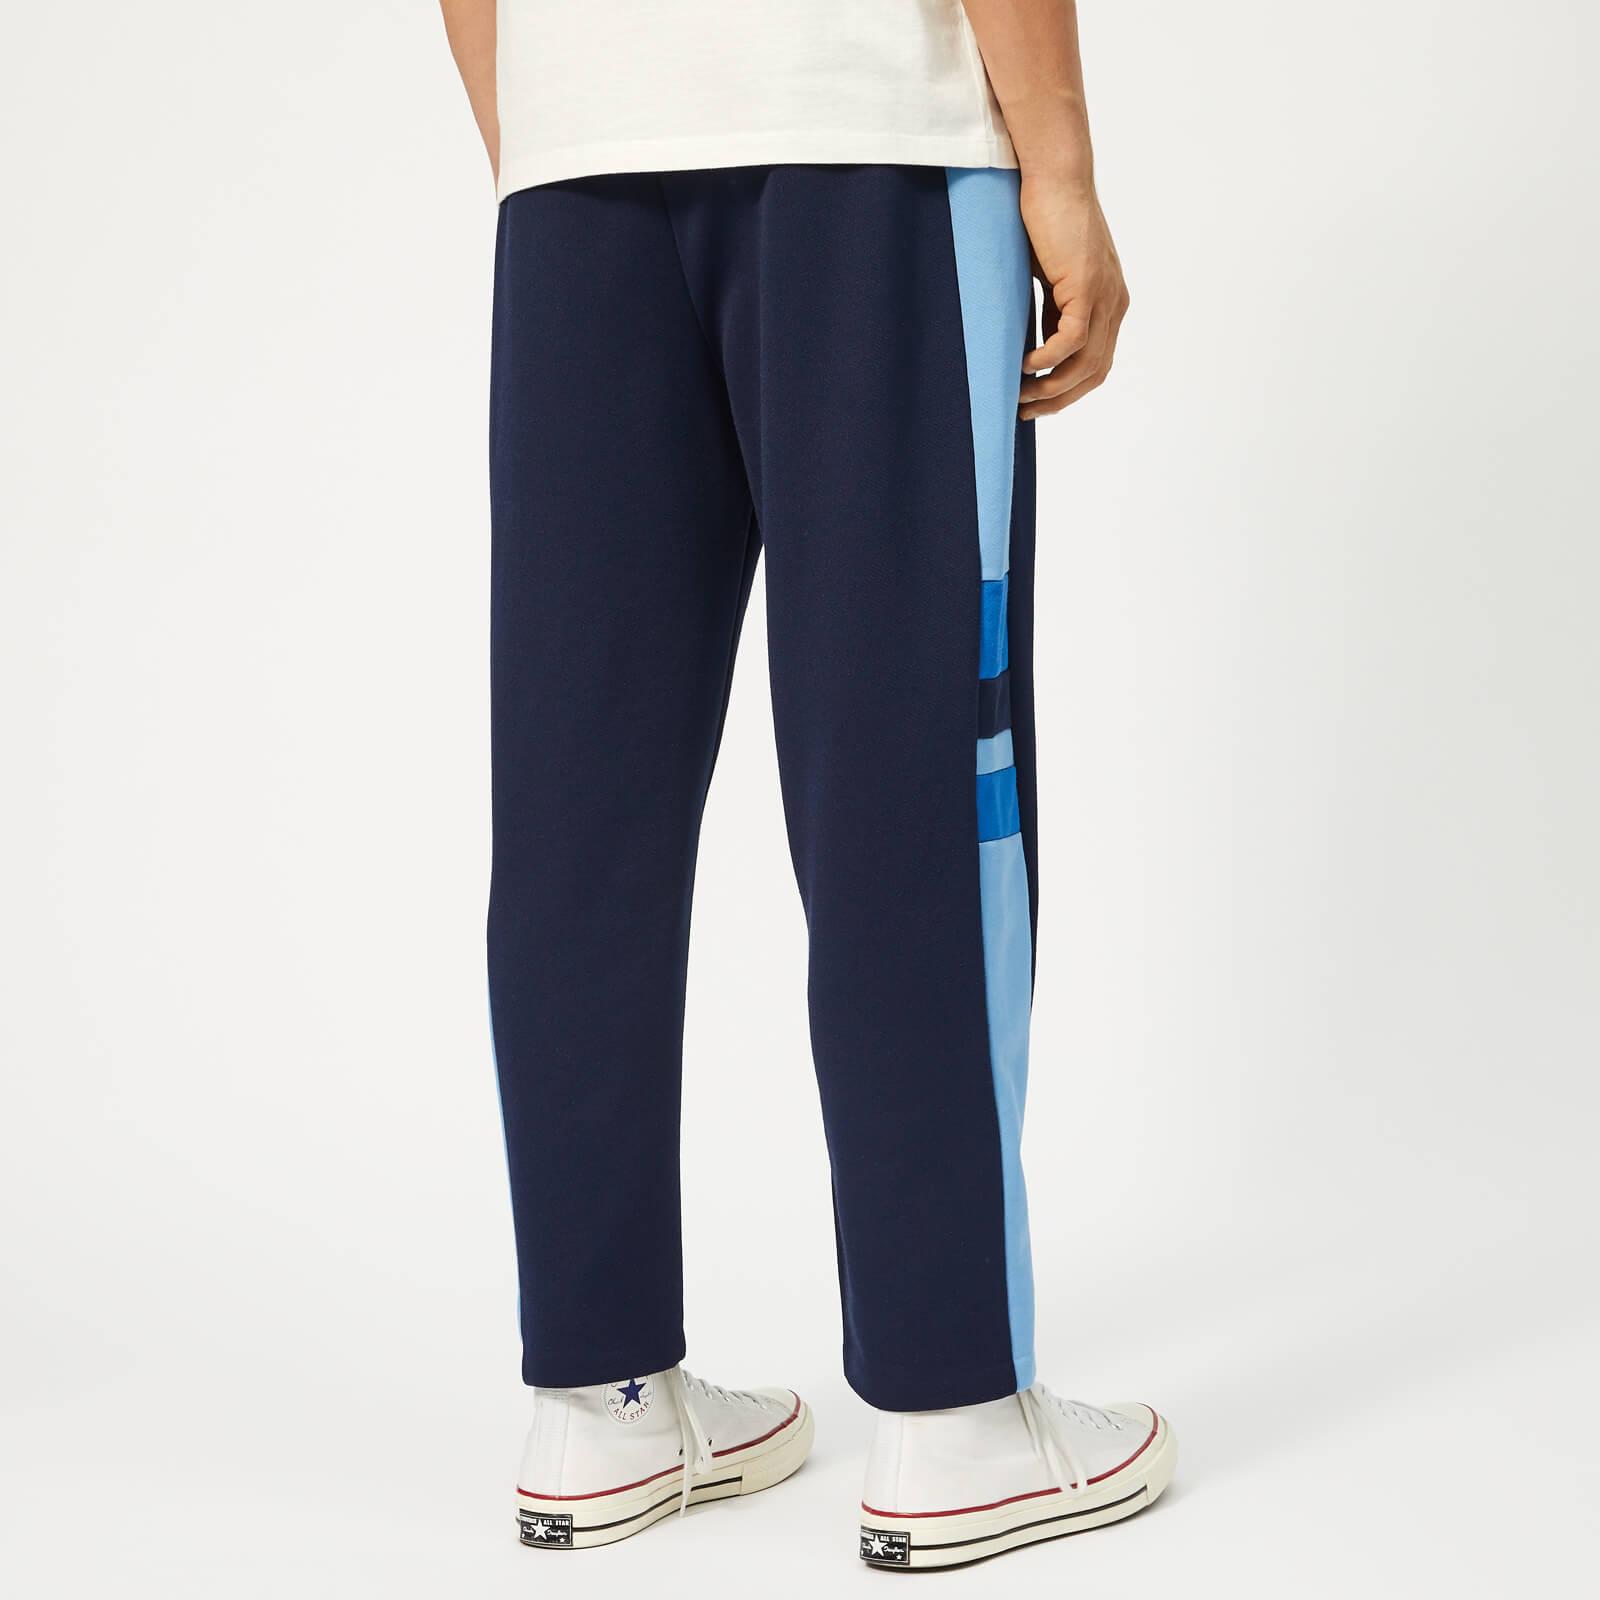 Maison Kitsuné Technical Jog Pants in Blue for Men - Lyst